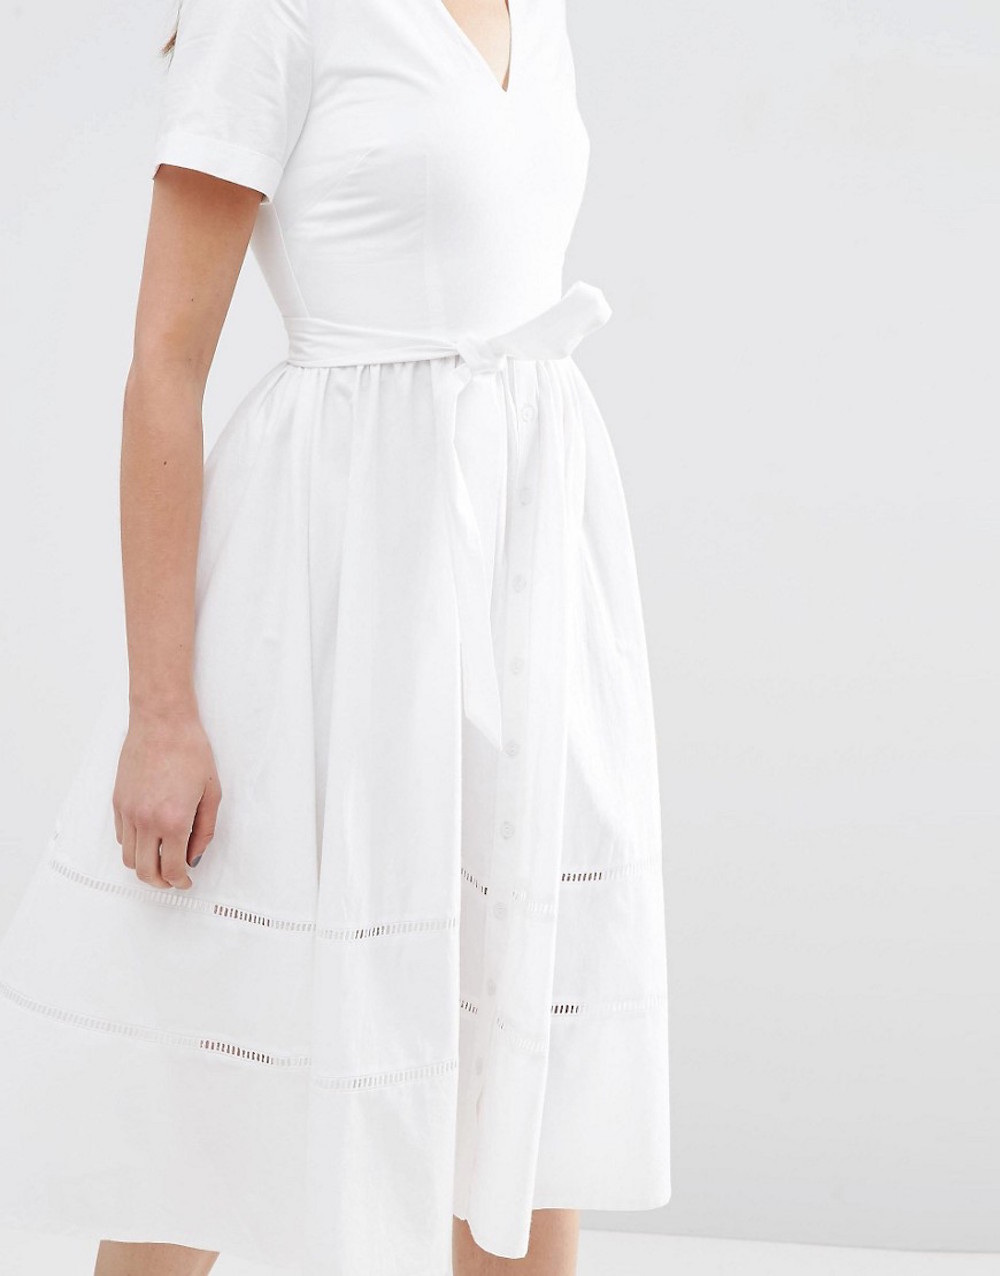 Asks white cotton midi dress